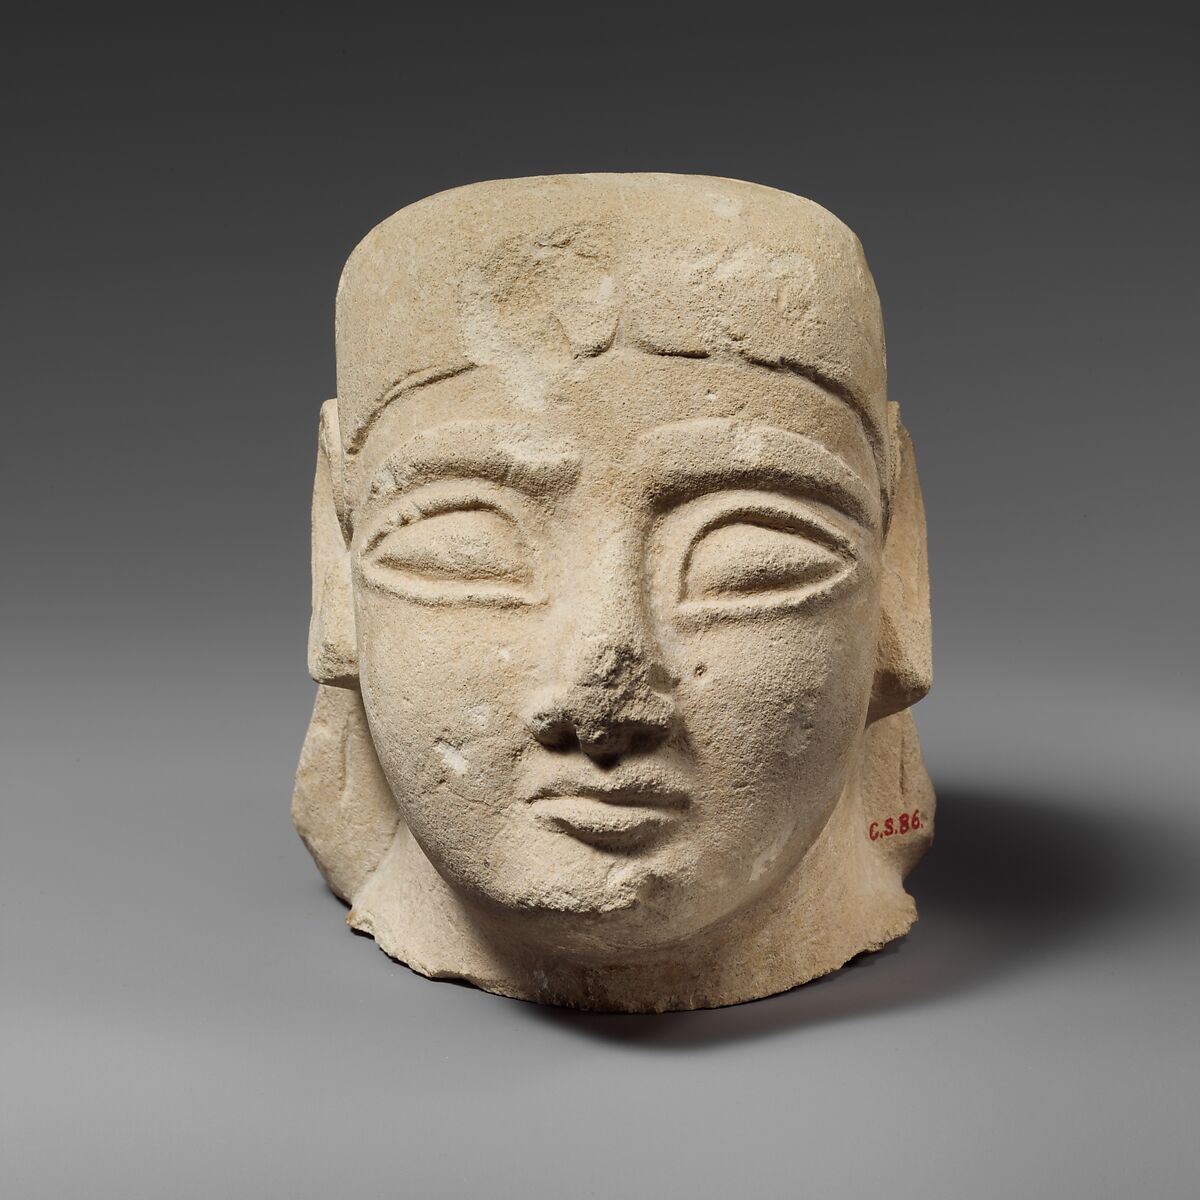 Limestone head of a beardless male with a plain headdress, Limestone, Cypriot 